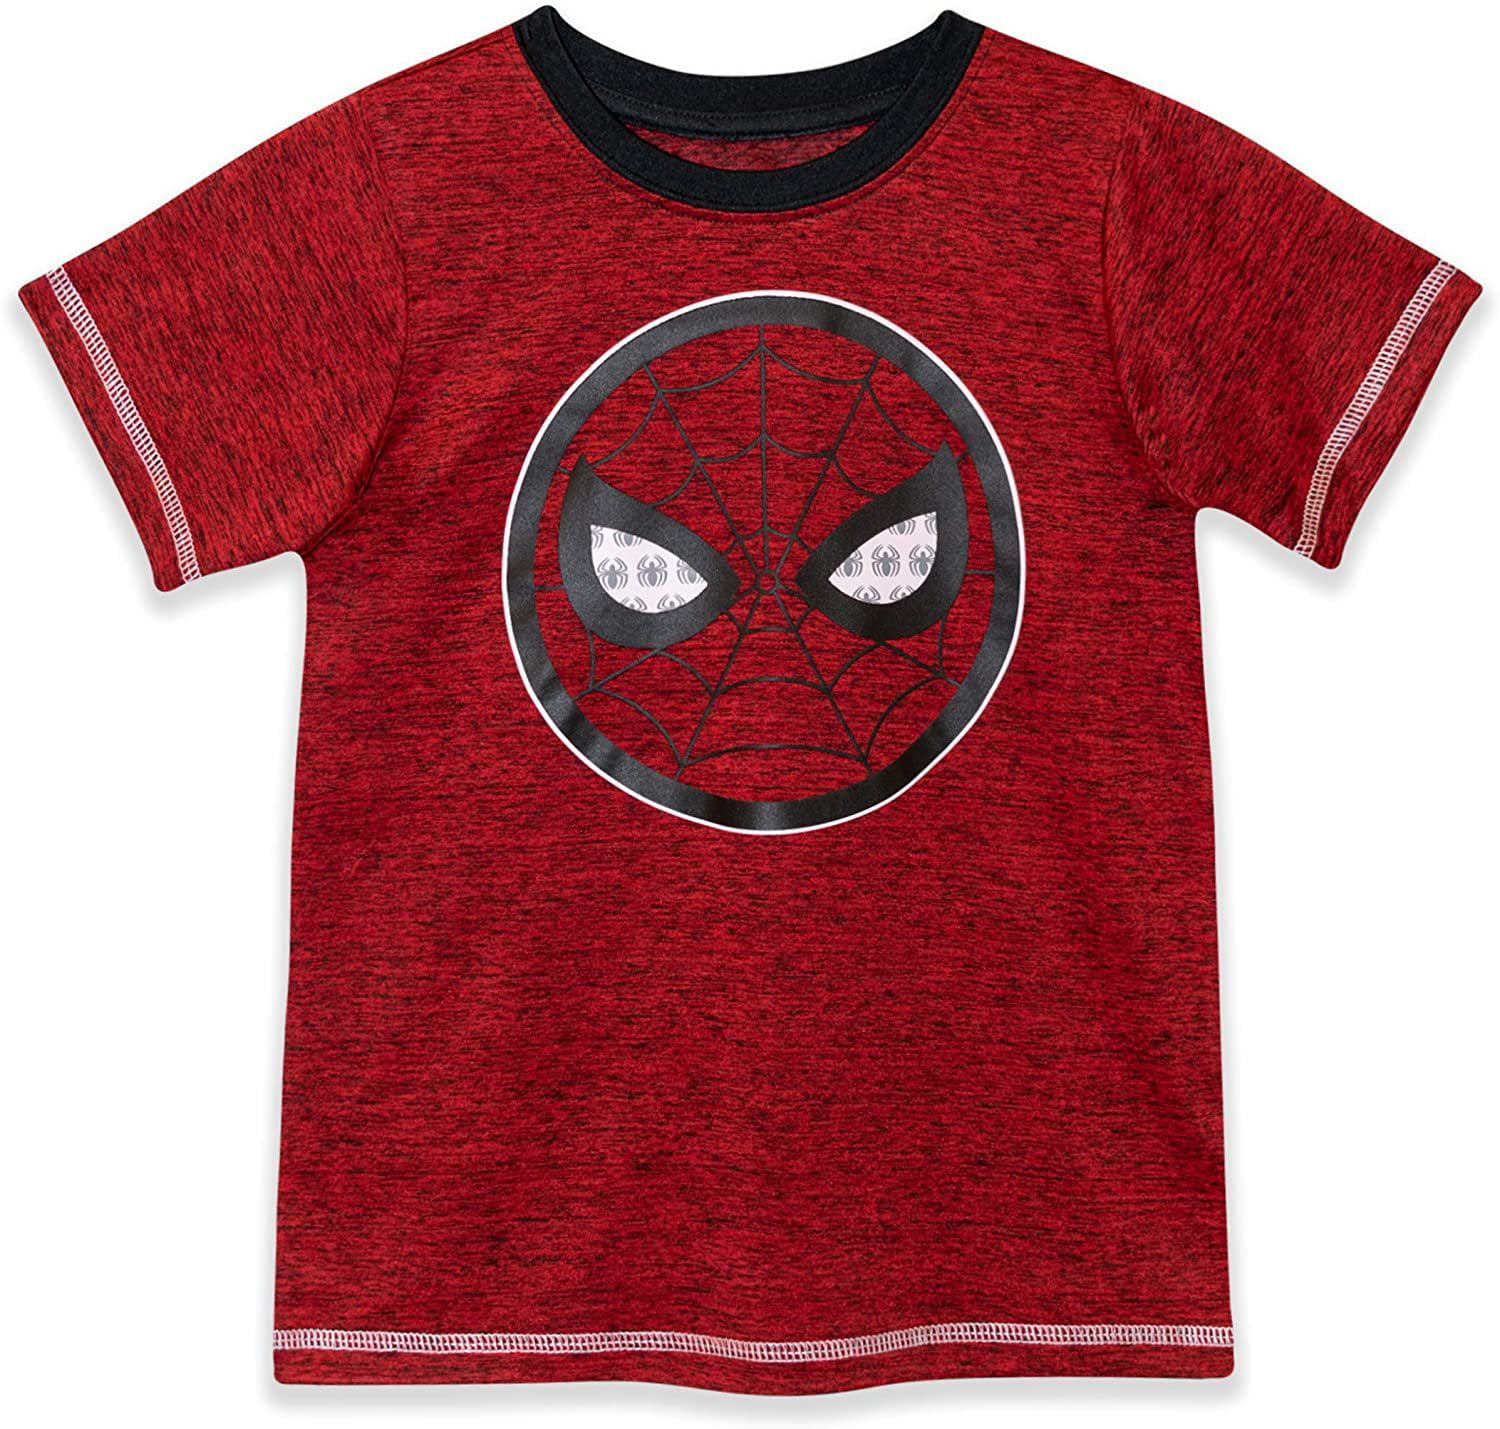 Boys Shirts Spiderman NWT Marvel sizes 5/6 and 7 clothing tops T-shirts cartoon 